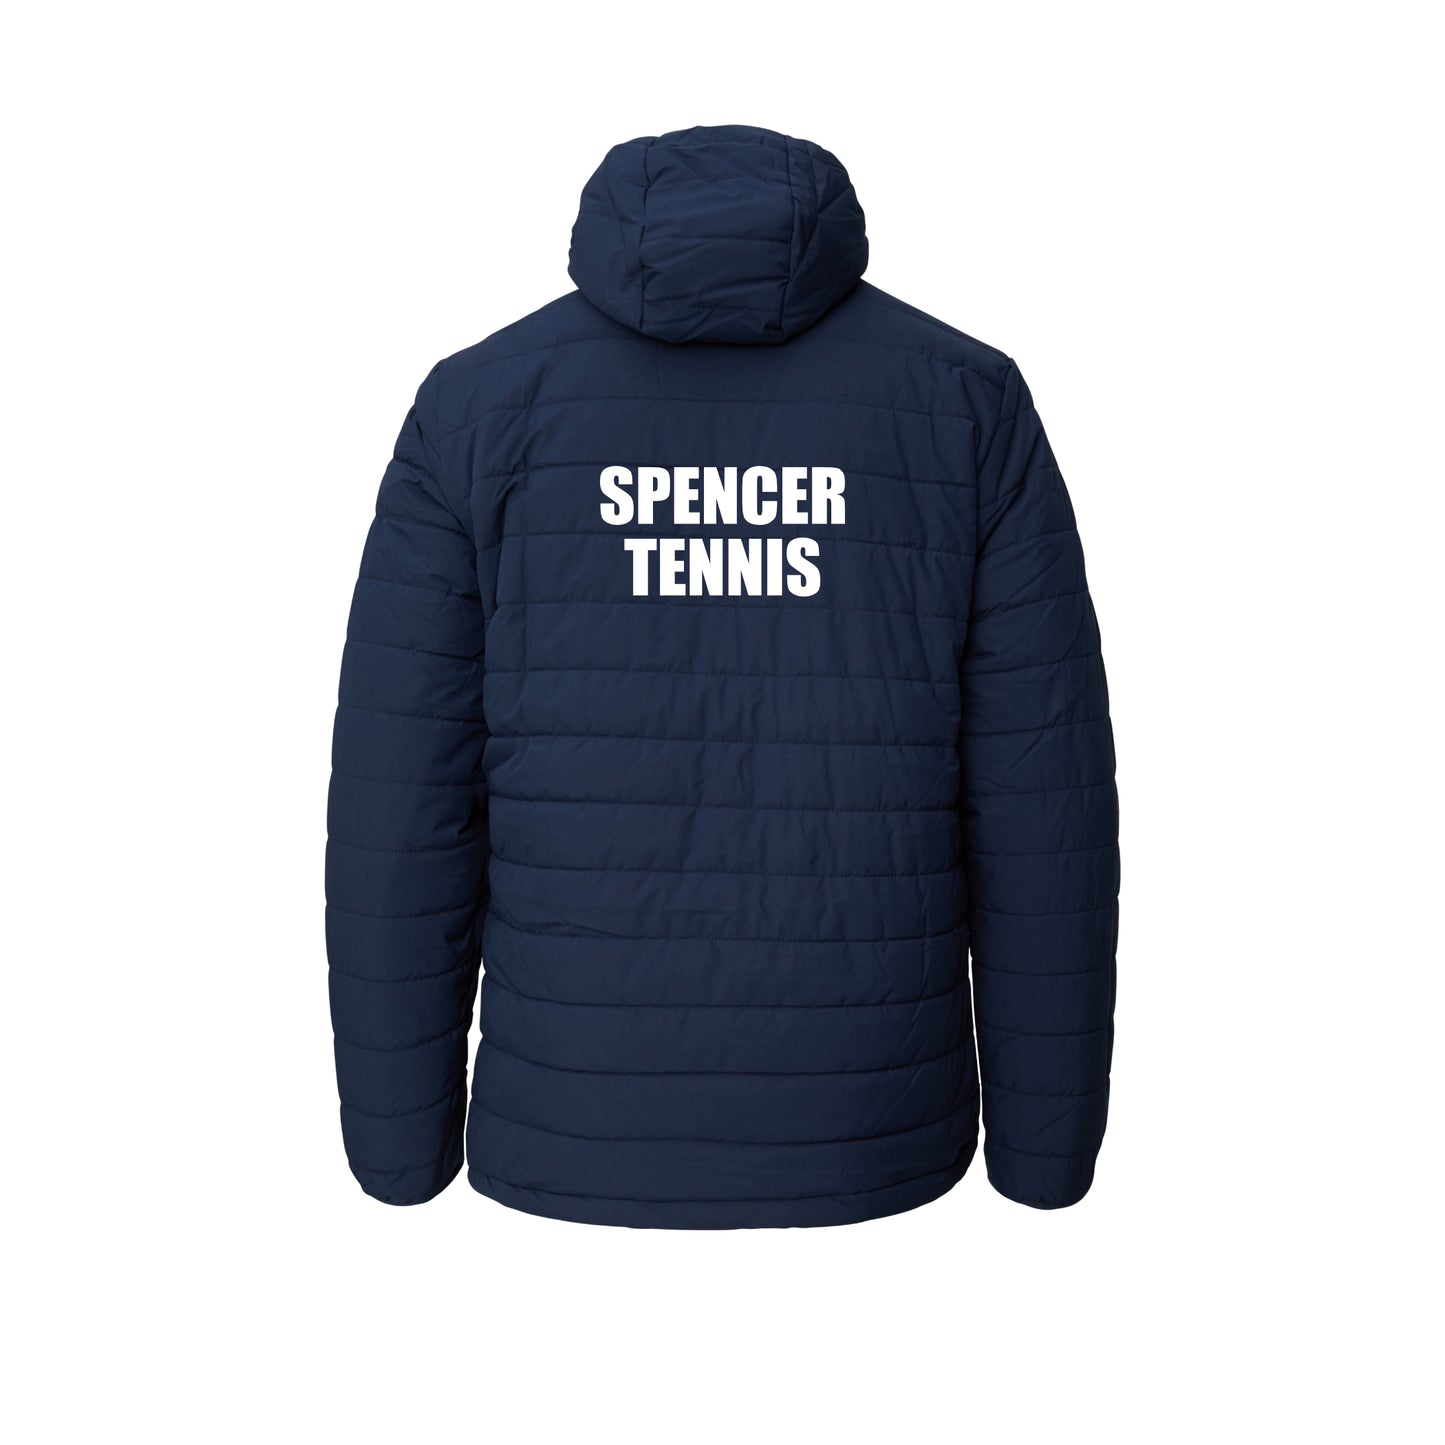 Spencer Tennis - Padded Jacket Unisex Navy